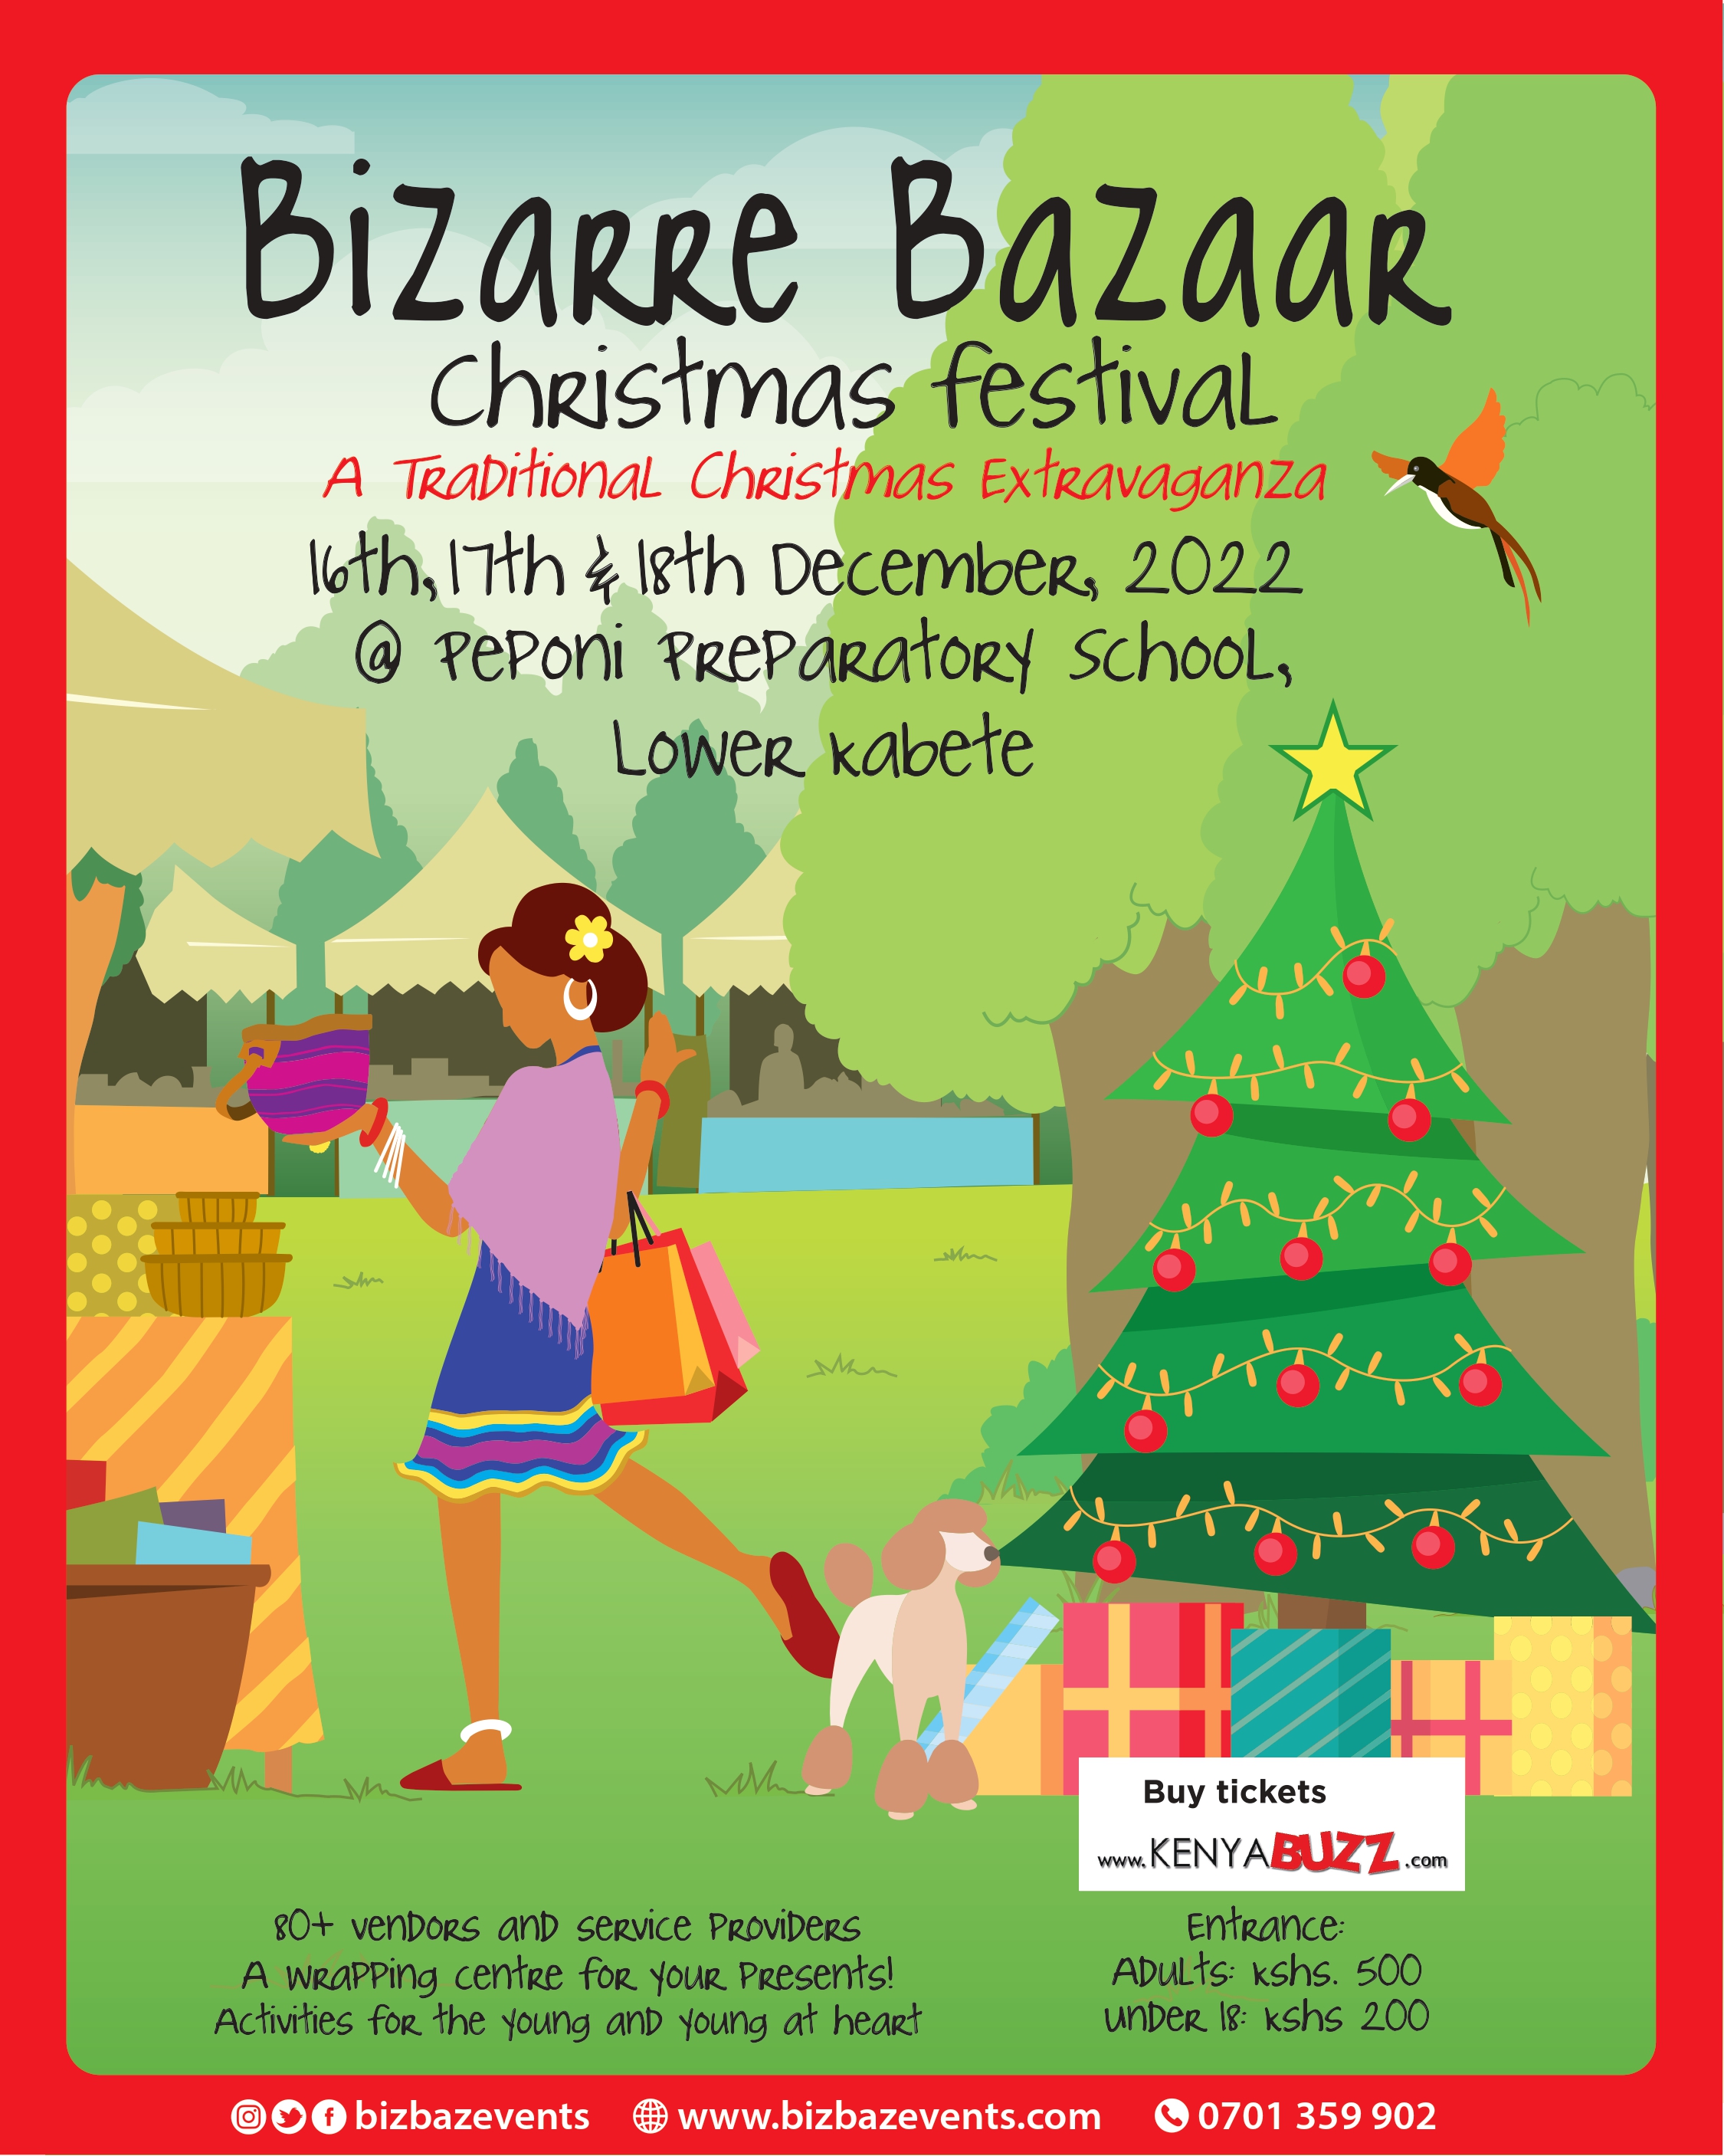 Bizarre Bazaar: Christmas Festival 2022